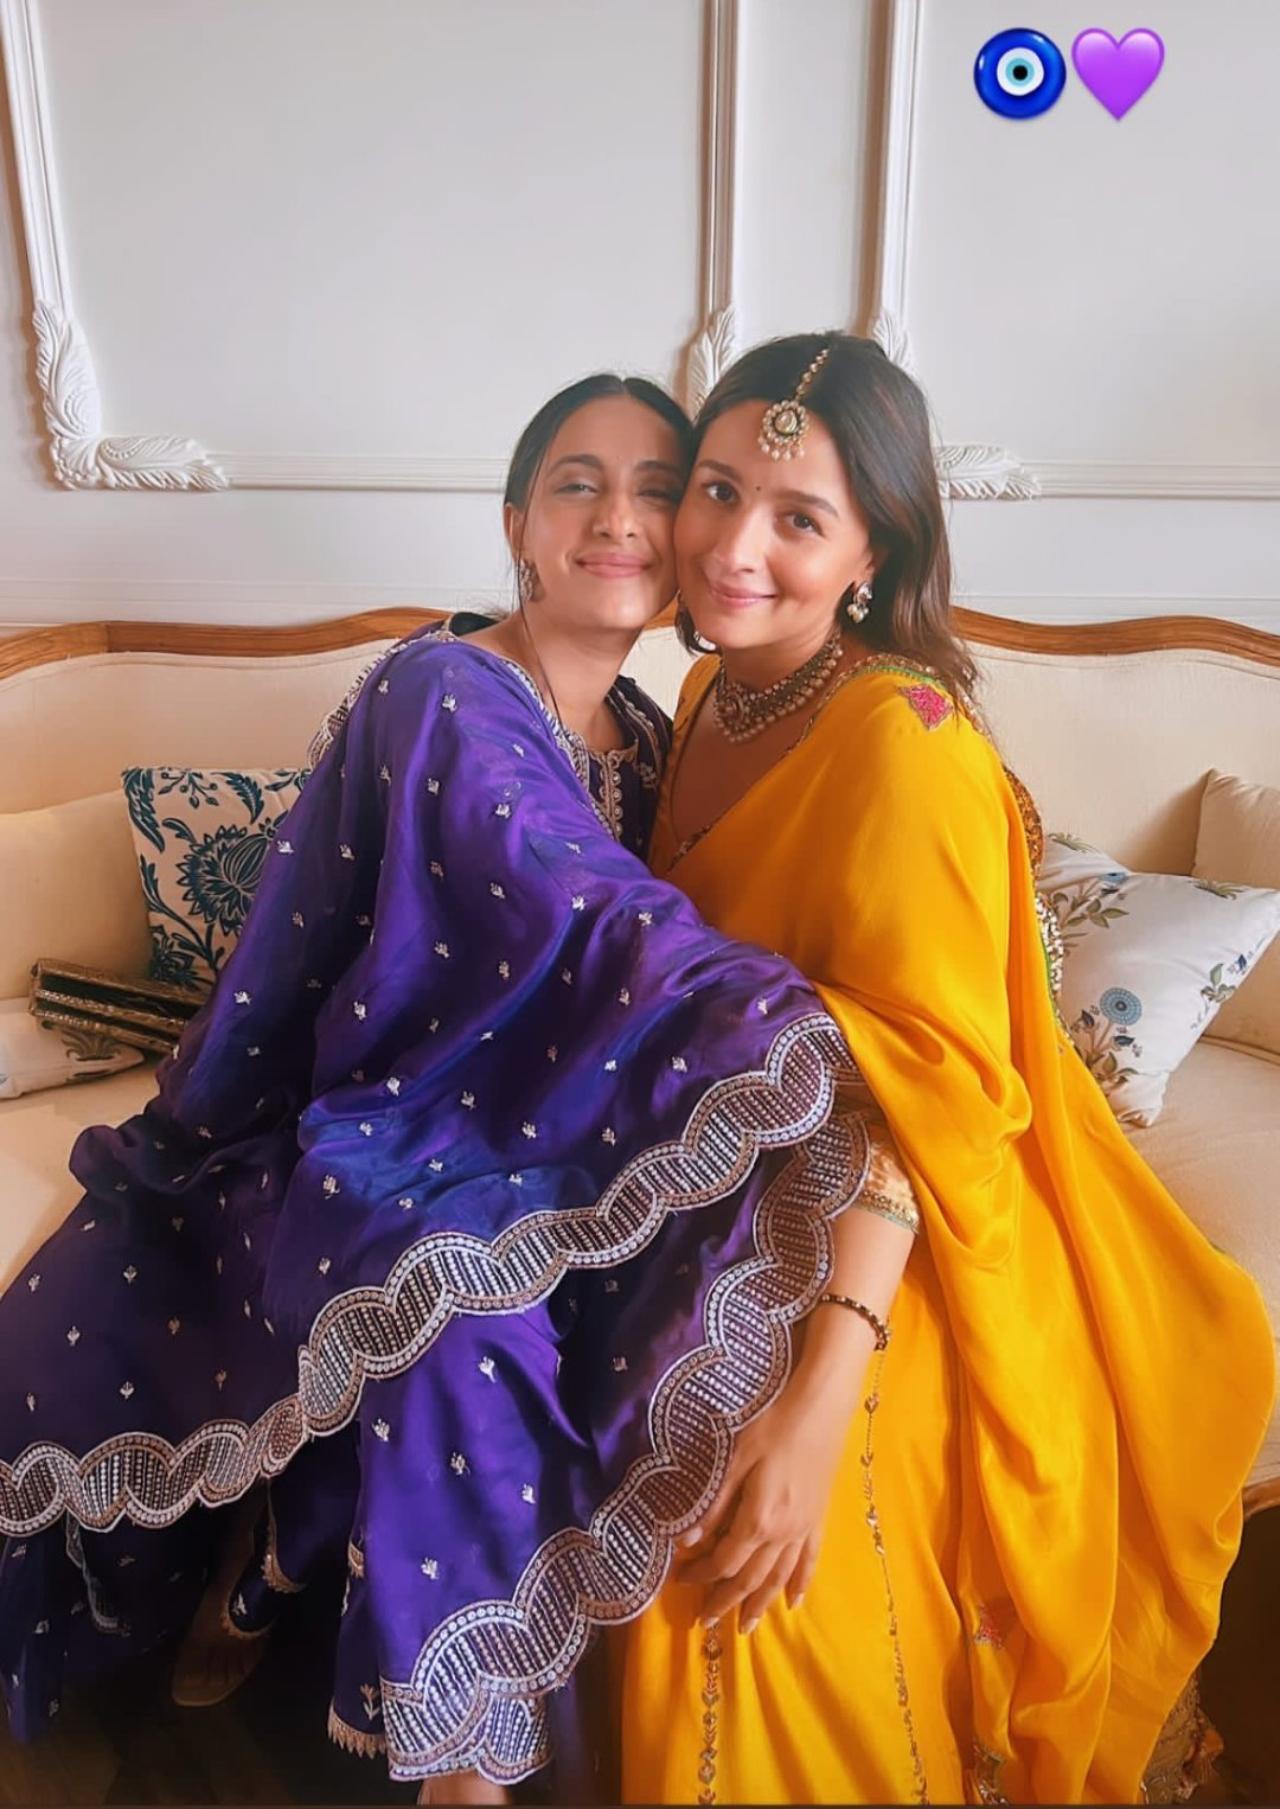 Inside Alia Bhatt's baby shower: Mom-to-be glows in yellow ensemble